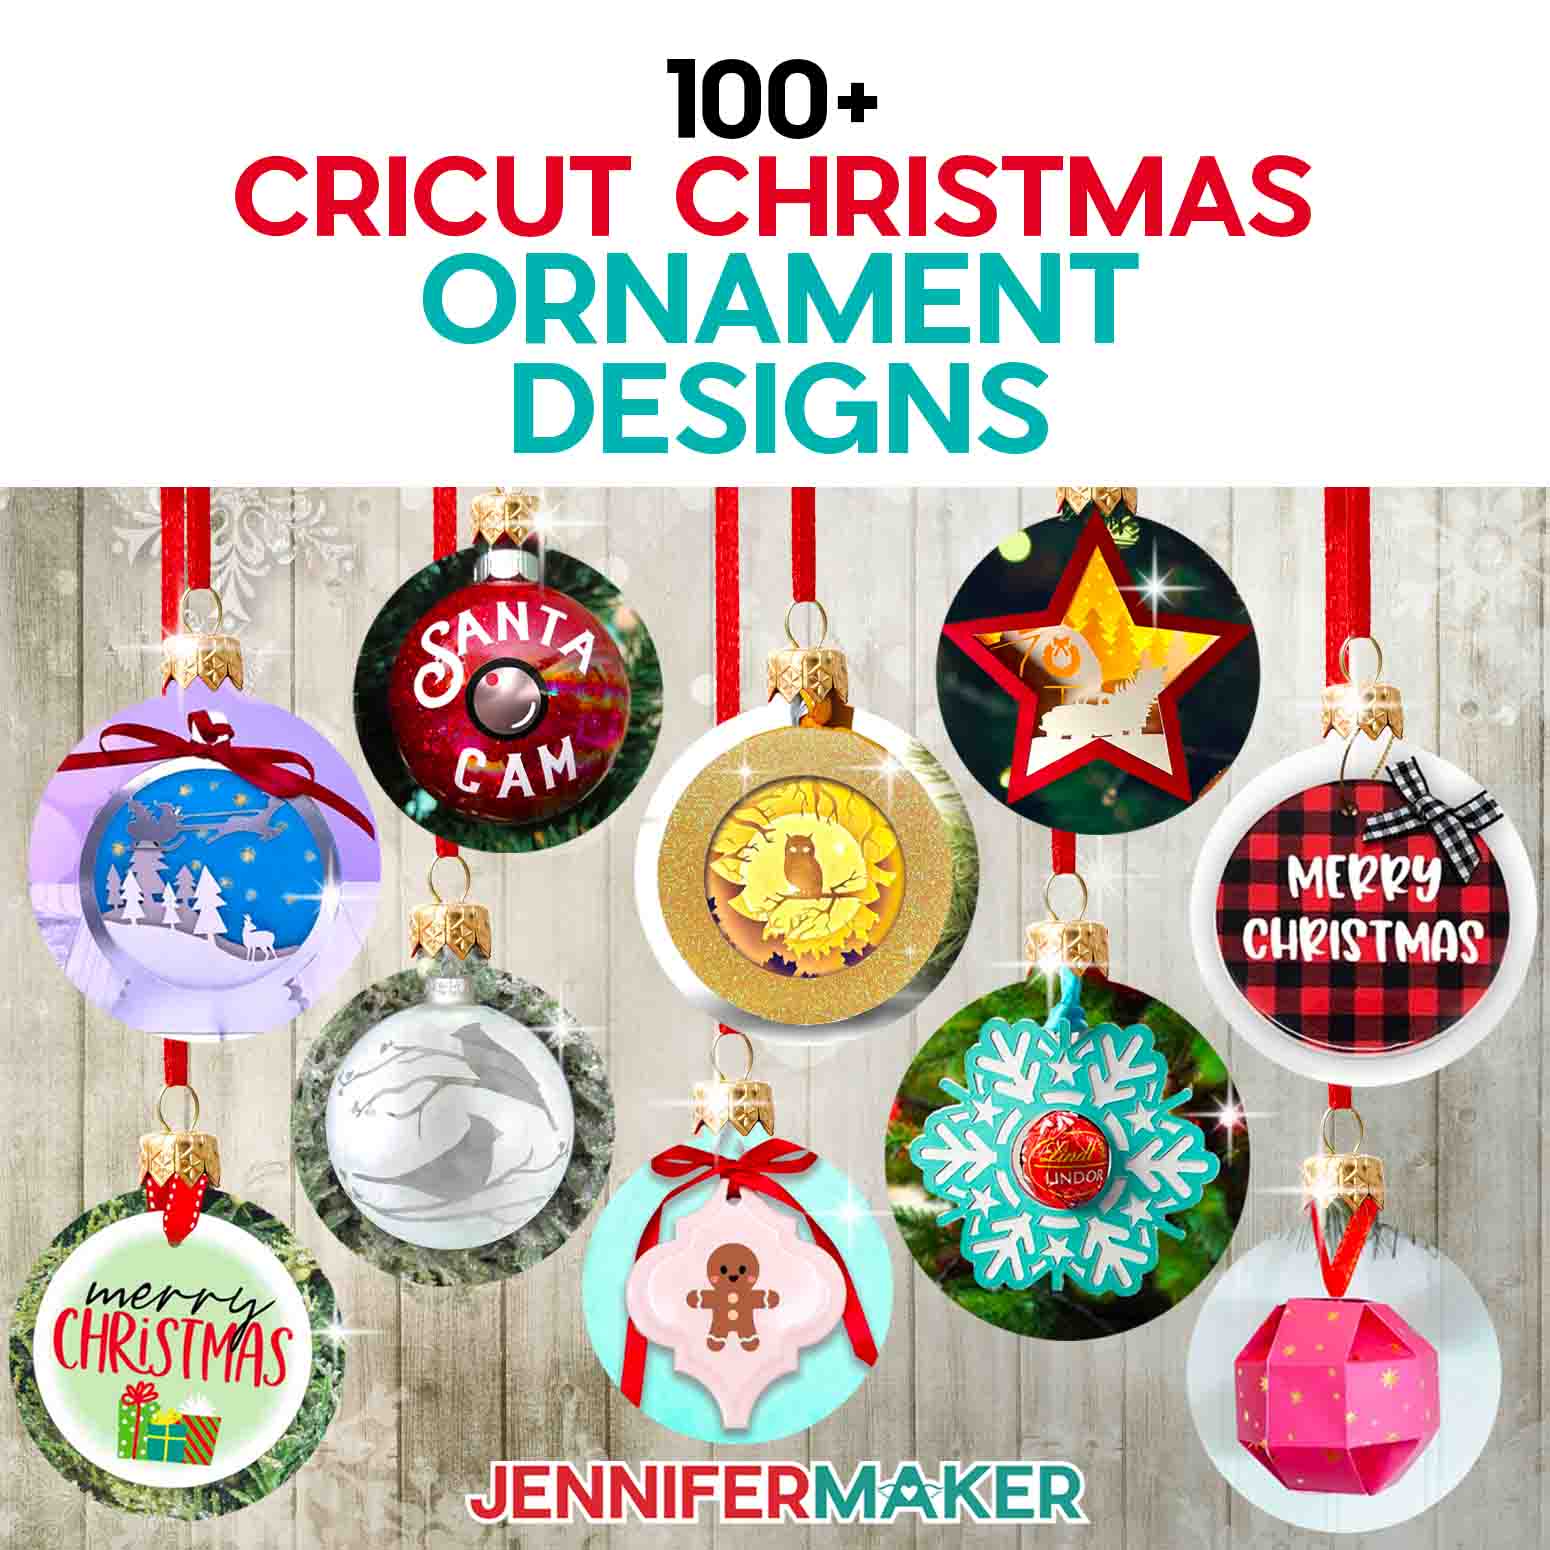 Cricut Christmas Ornaments: 100+ DIY Ideas to Make!